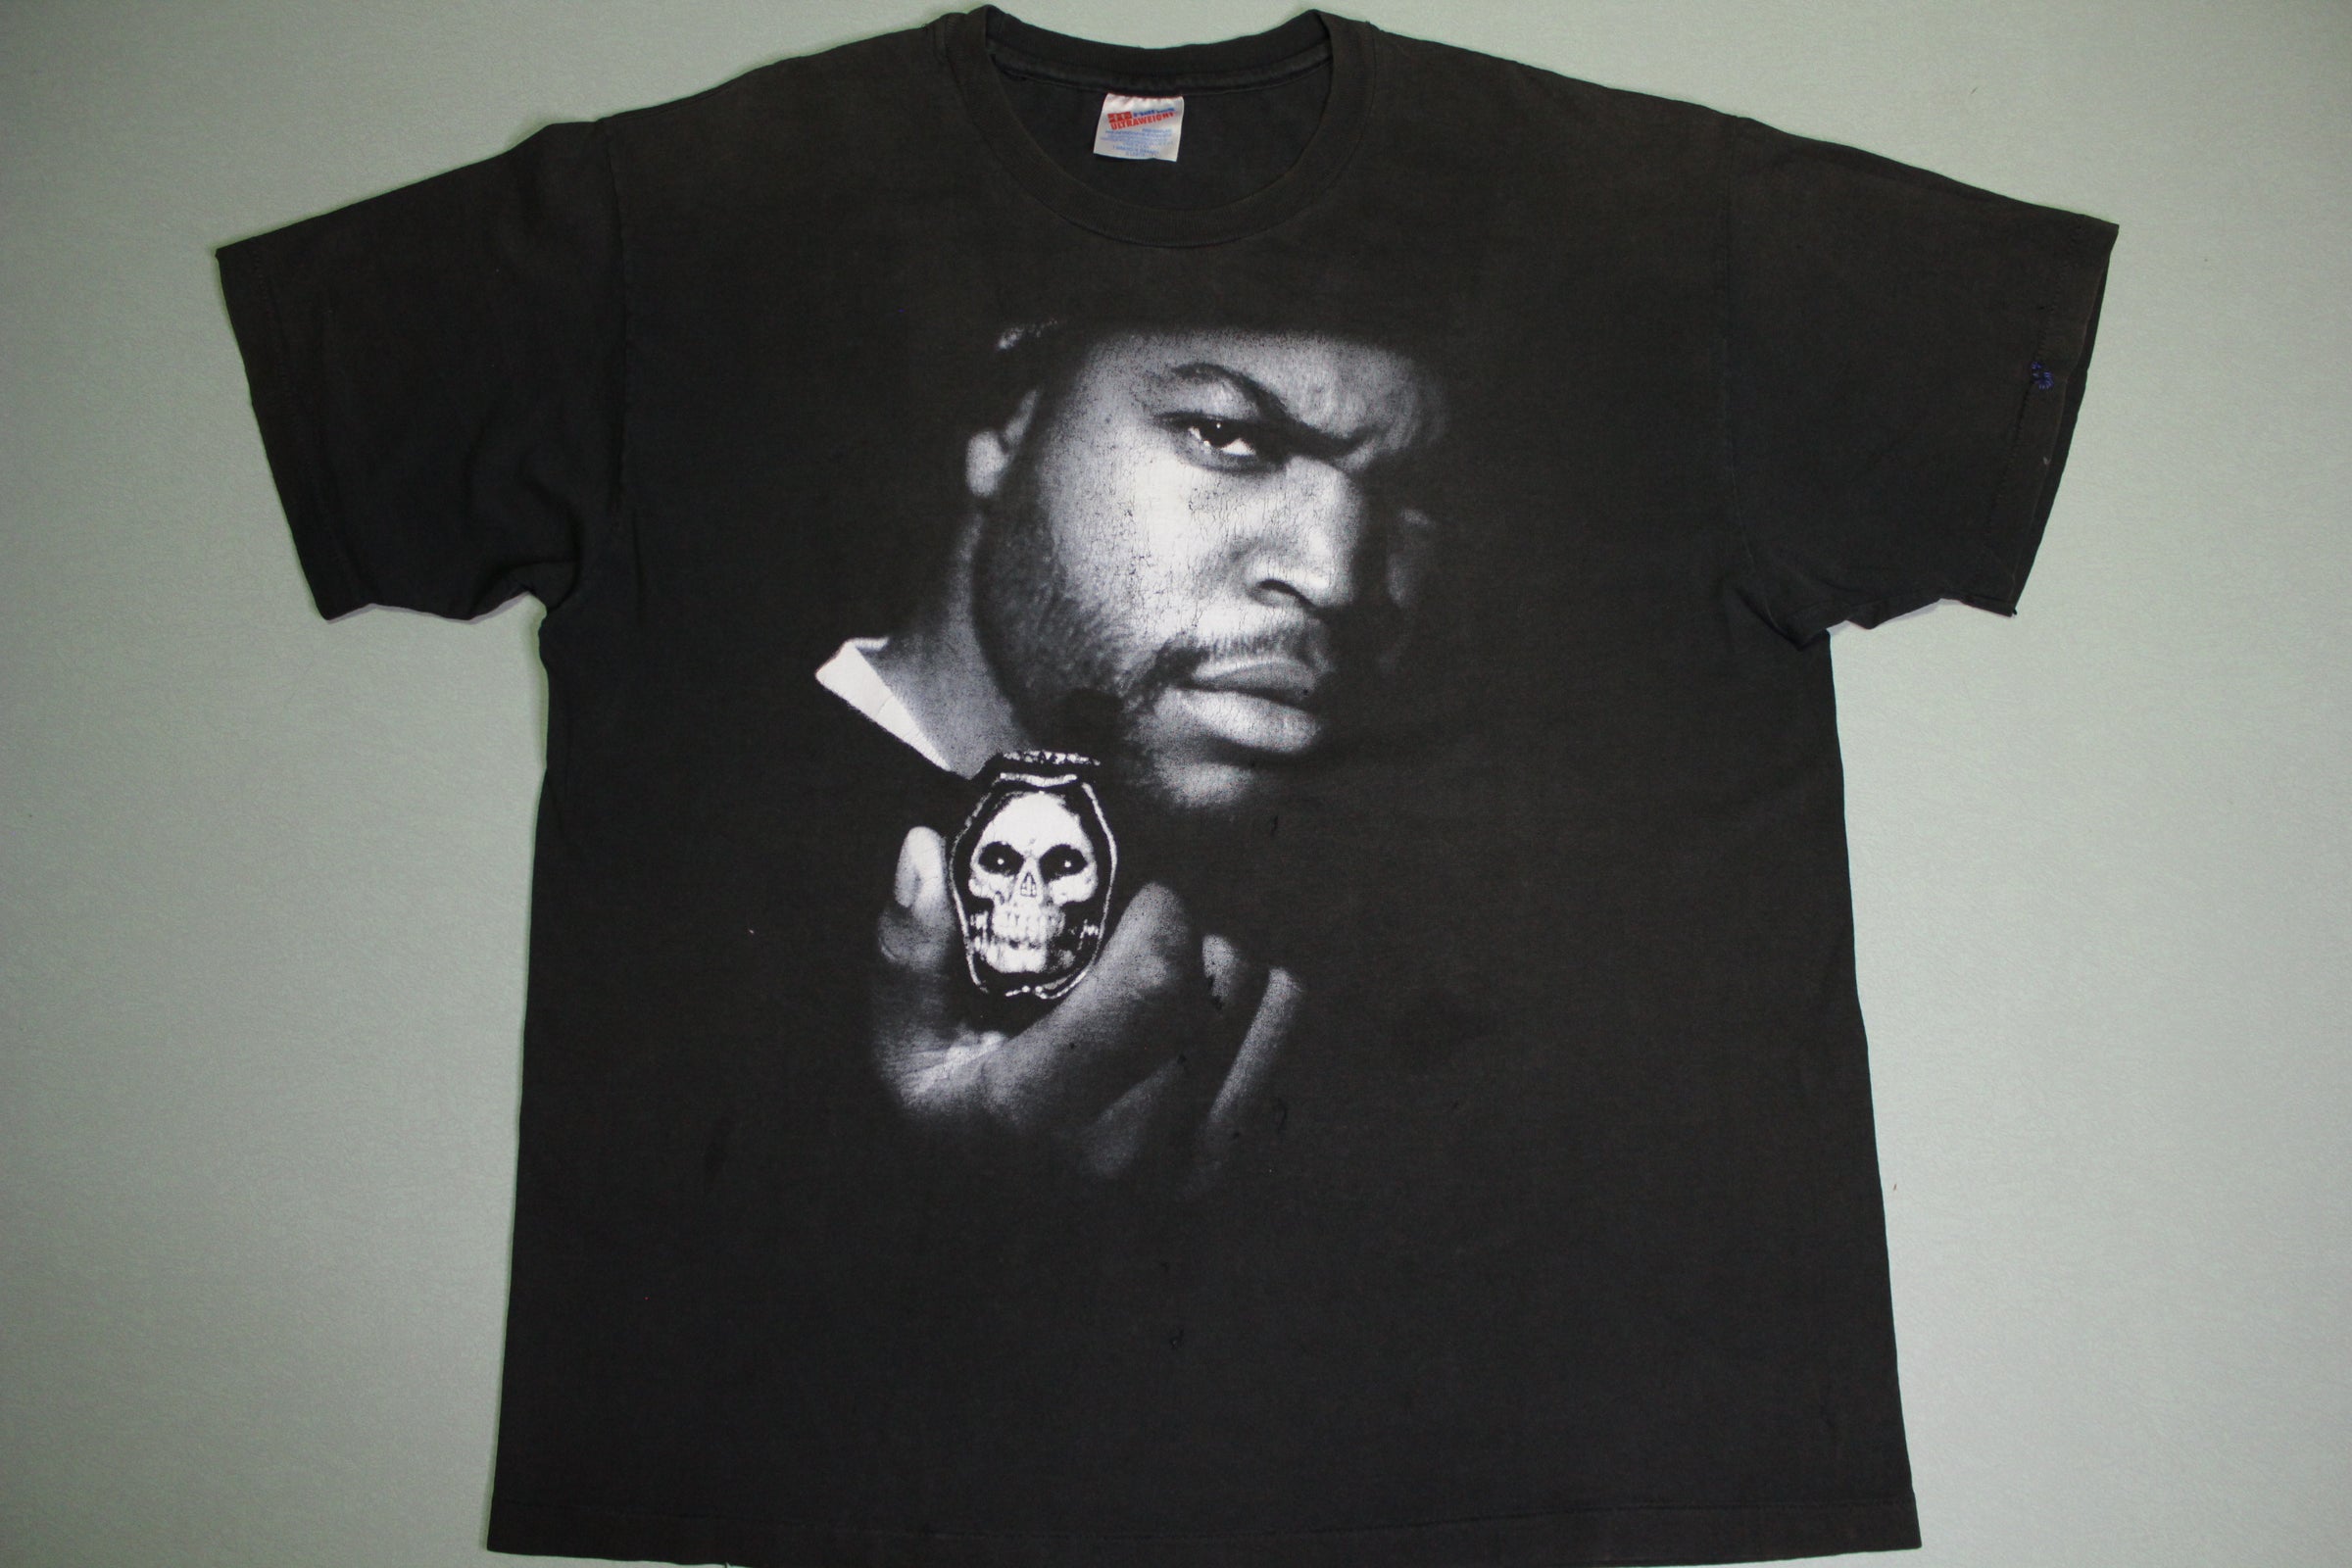 Vintage 90's Ice Cube - The Predator - Rap T-shirt ///SOLD///